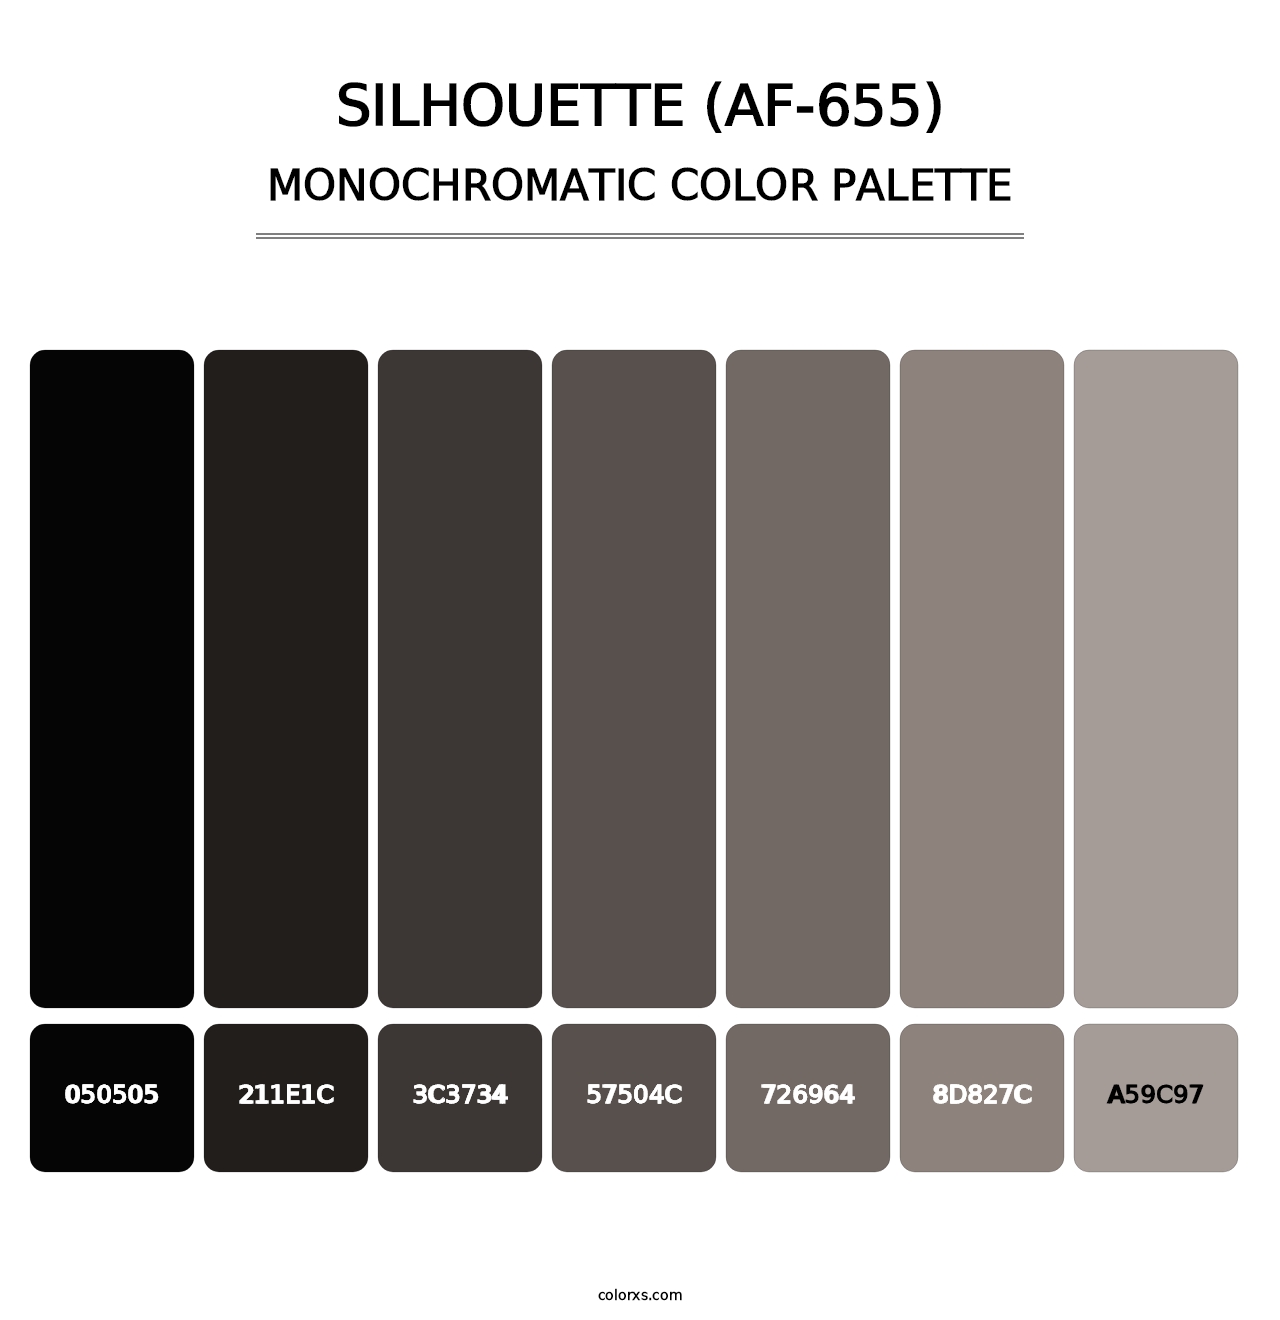 Silhouette (AF-655) - Monochromatic Color Palette